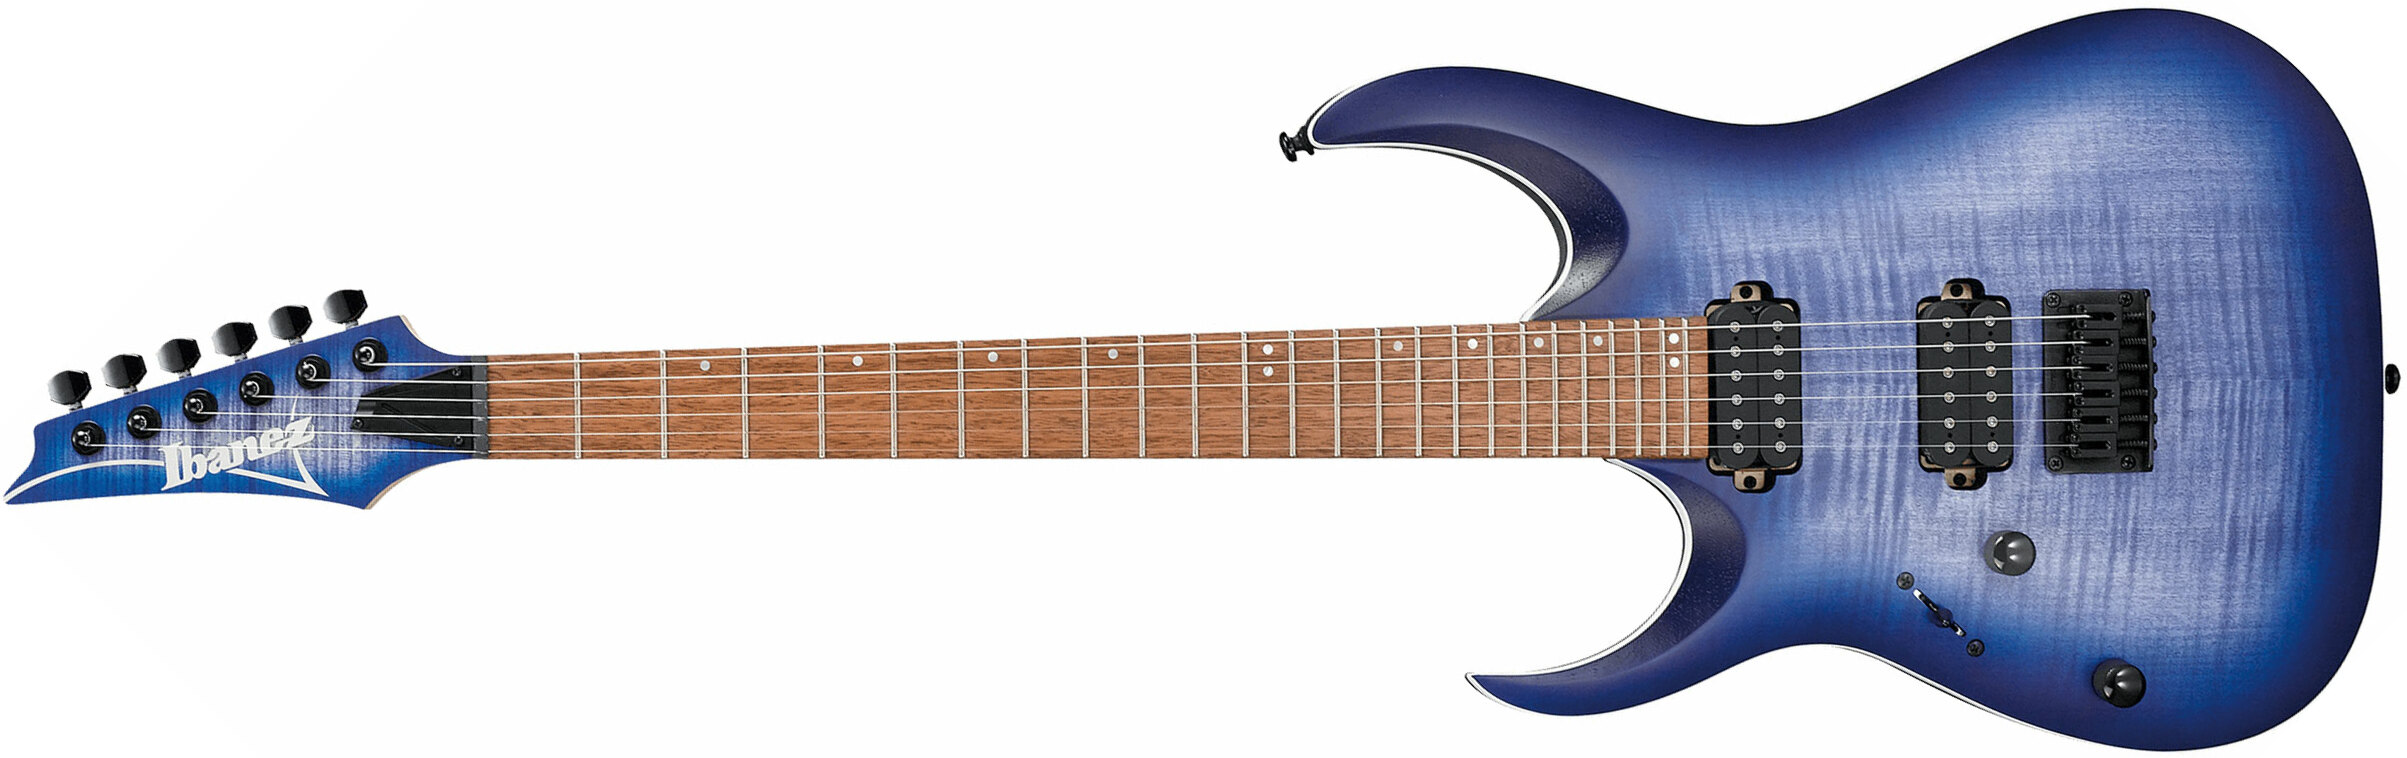 Ibanez Rga42fml Blf Gaucher Standard Hh Ht Rw - Blue Lagoon Burst Flat - Str shape electric guitar - Main picture